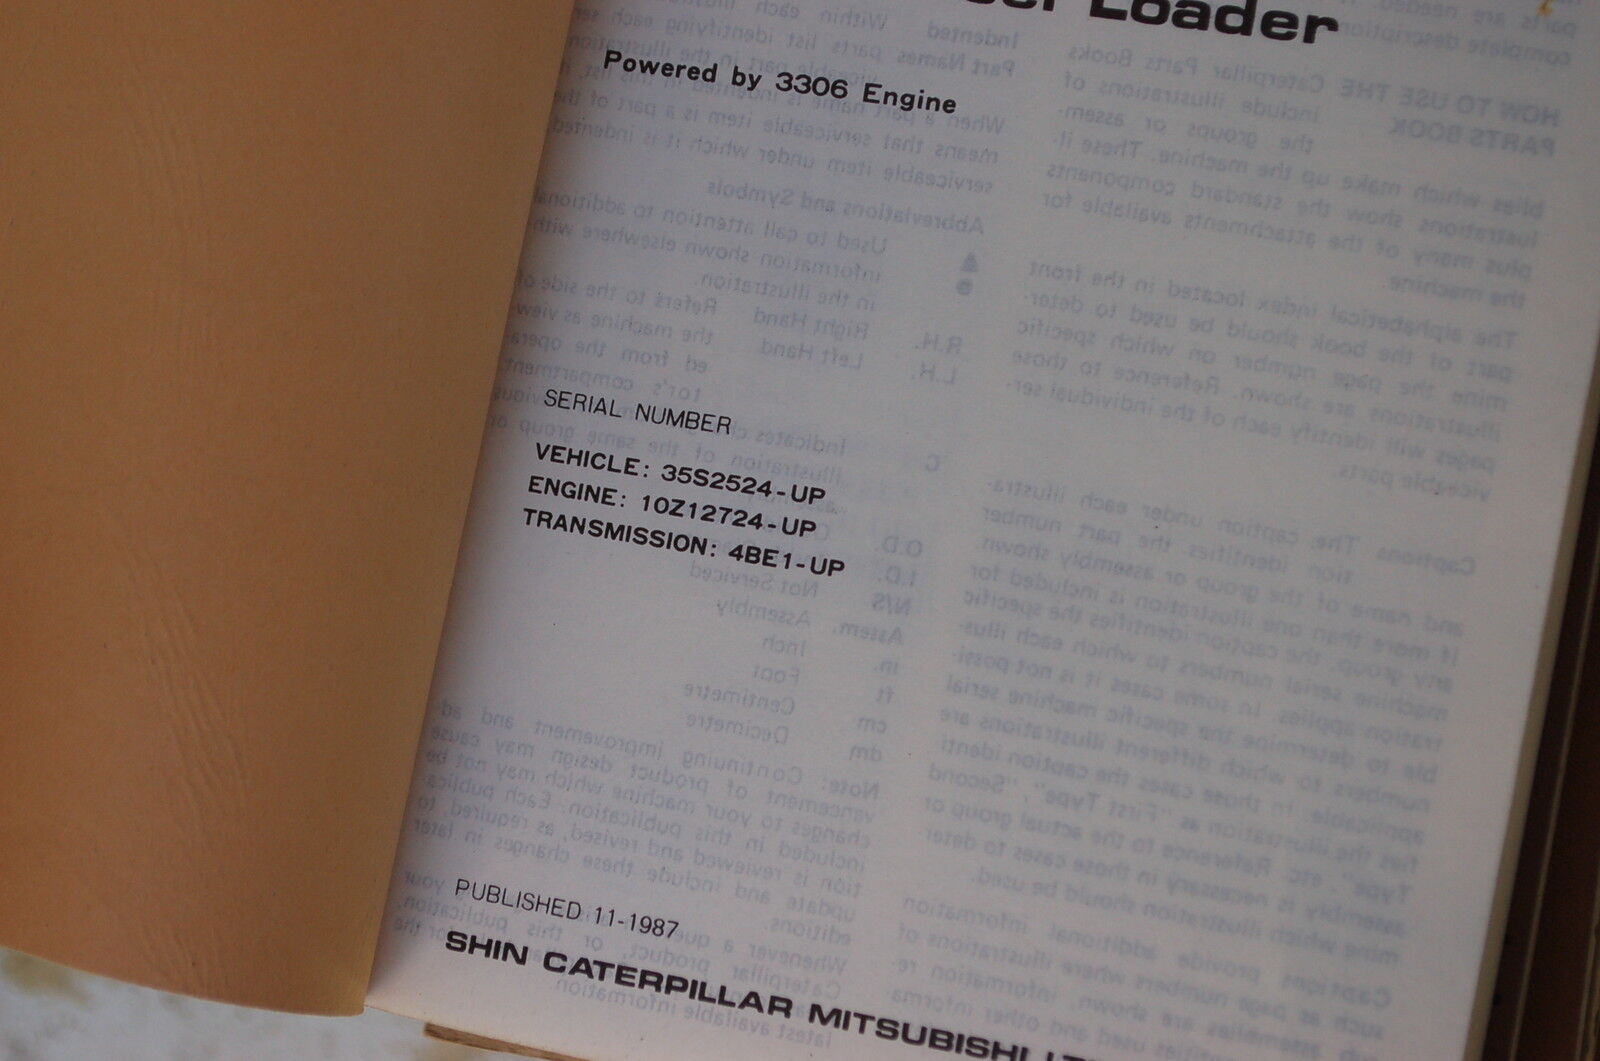 Details zu  Cat Caterpillar 966E Rad Lader Teile Manuell Buch Mitsubishi 1987 Vorne Ende Lager ist billig